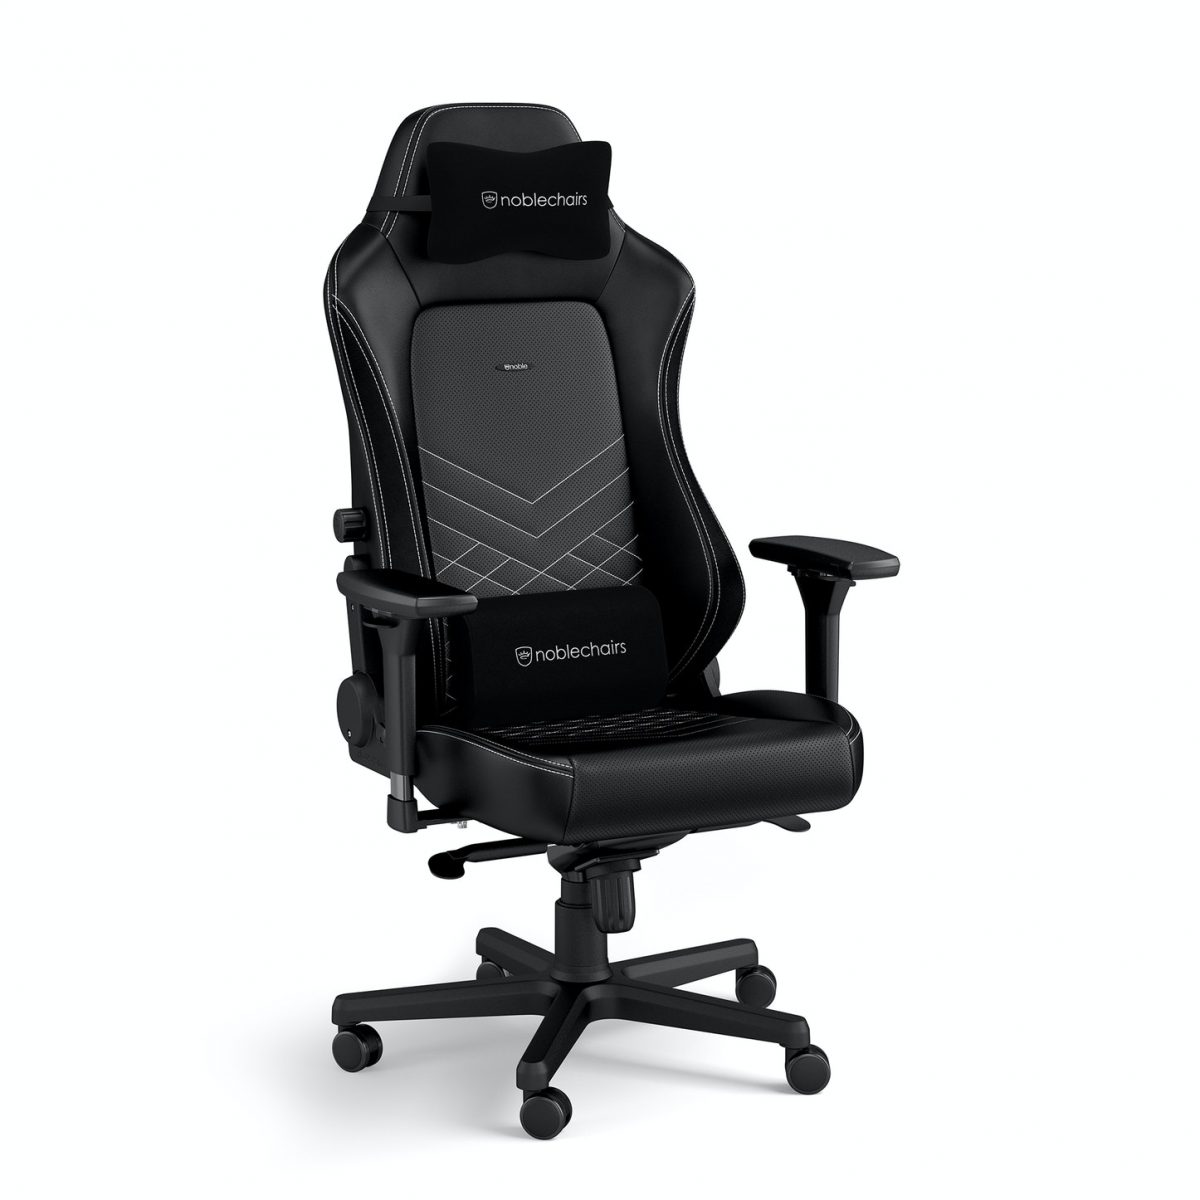 noblechairs HERO Gaming Chair - cold foam, steel armrests,  60mm casters, 150kg - black/platinum - CASEKING 2.35.63.01.010